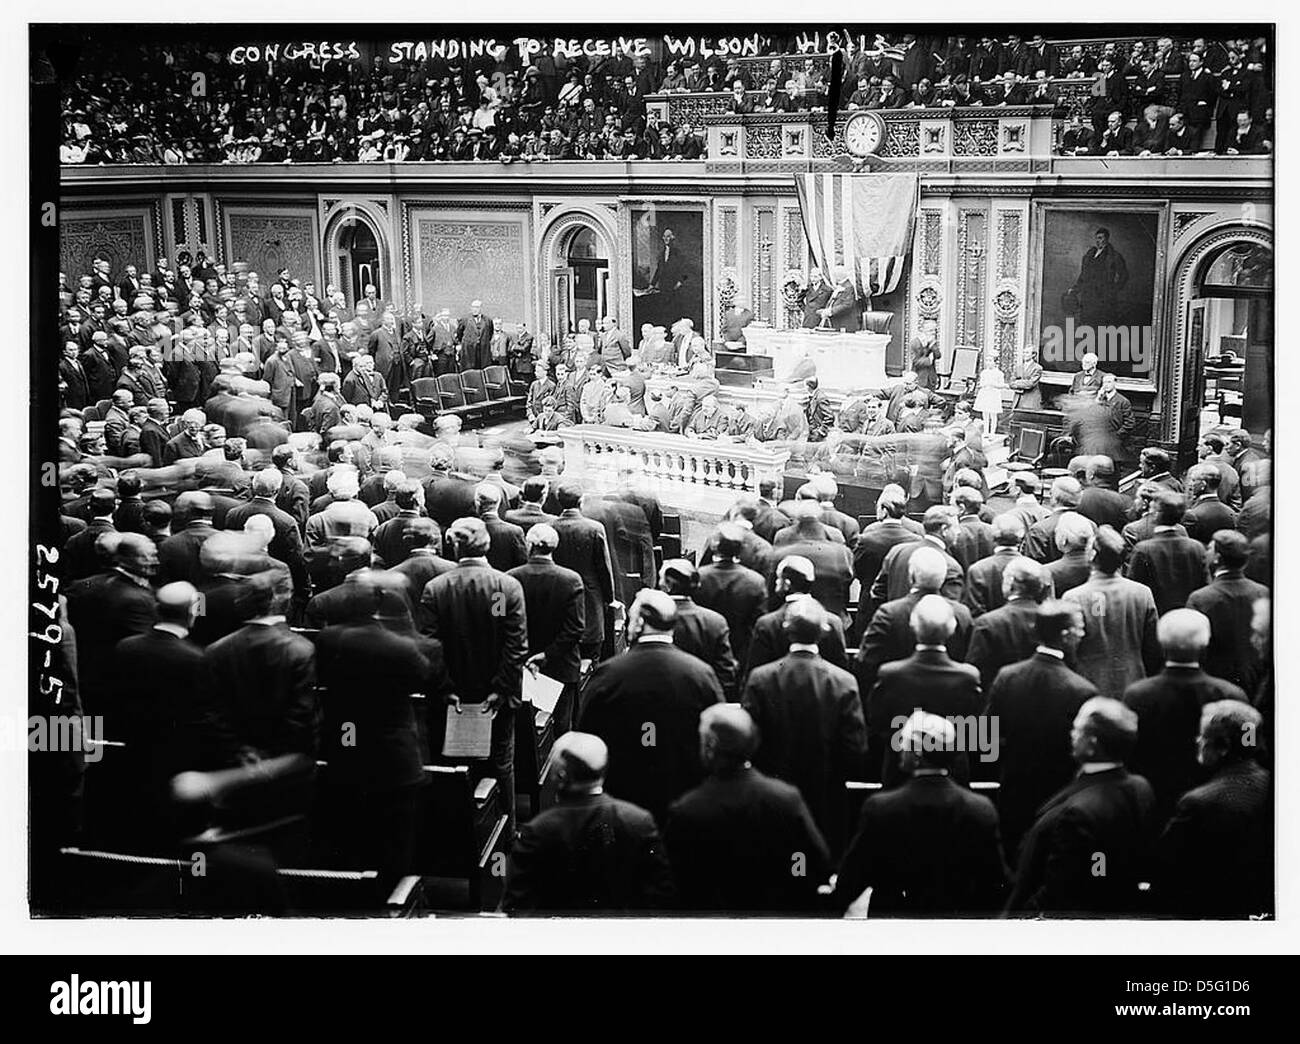 Congress standing to receive Wilson (LOC) Stock Photo